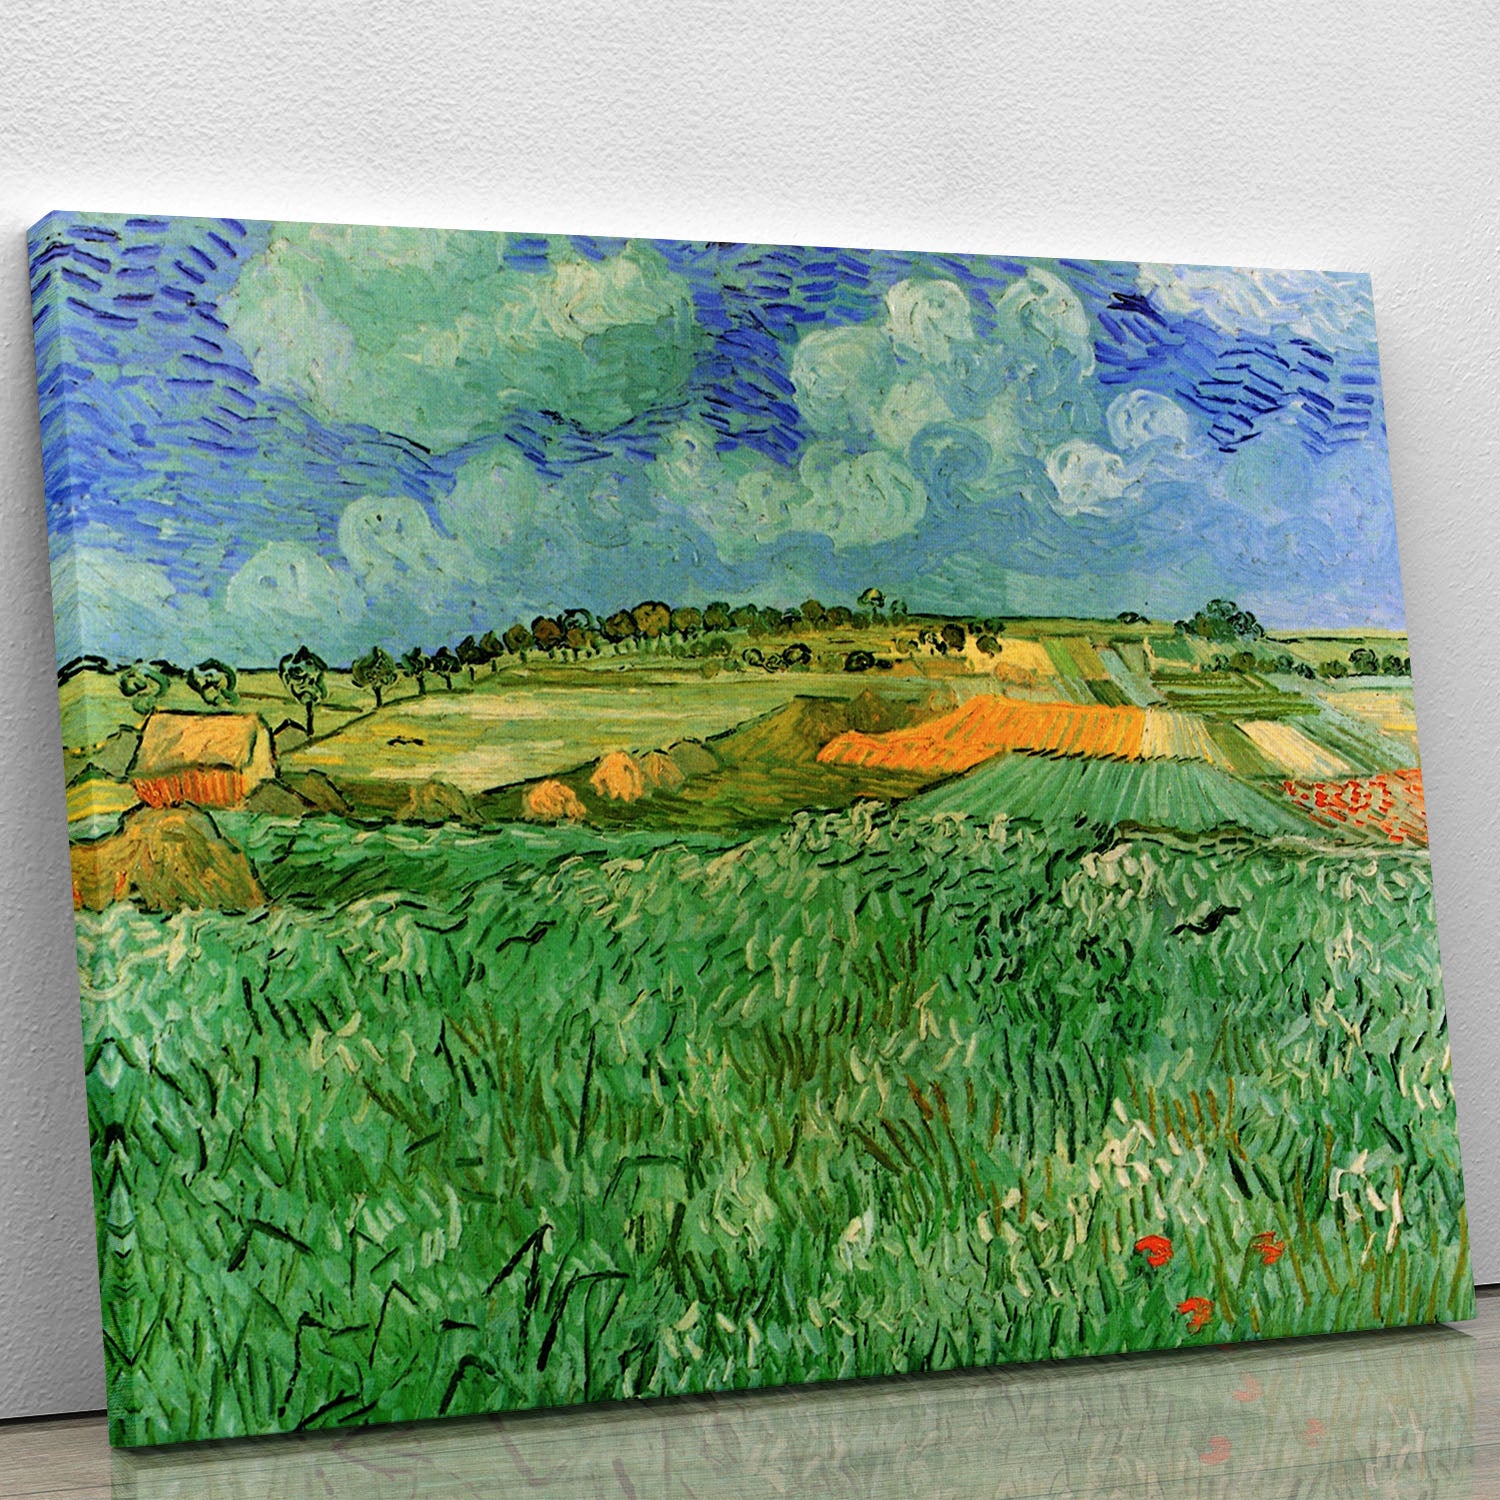 Plain Near Auvers by Van Gogh Canvas Print or Poster - Canvas Art Rocks - 1